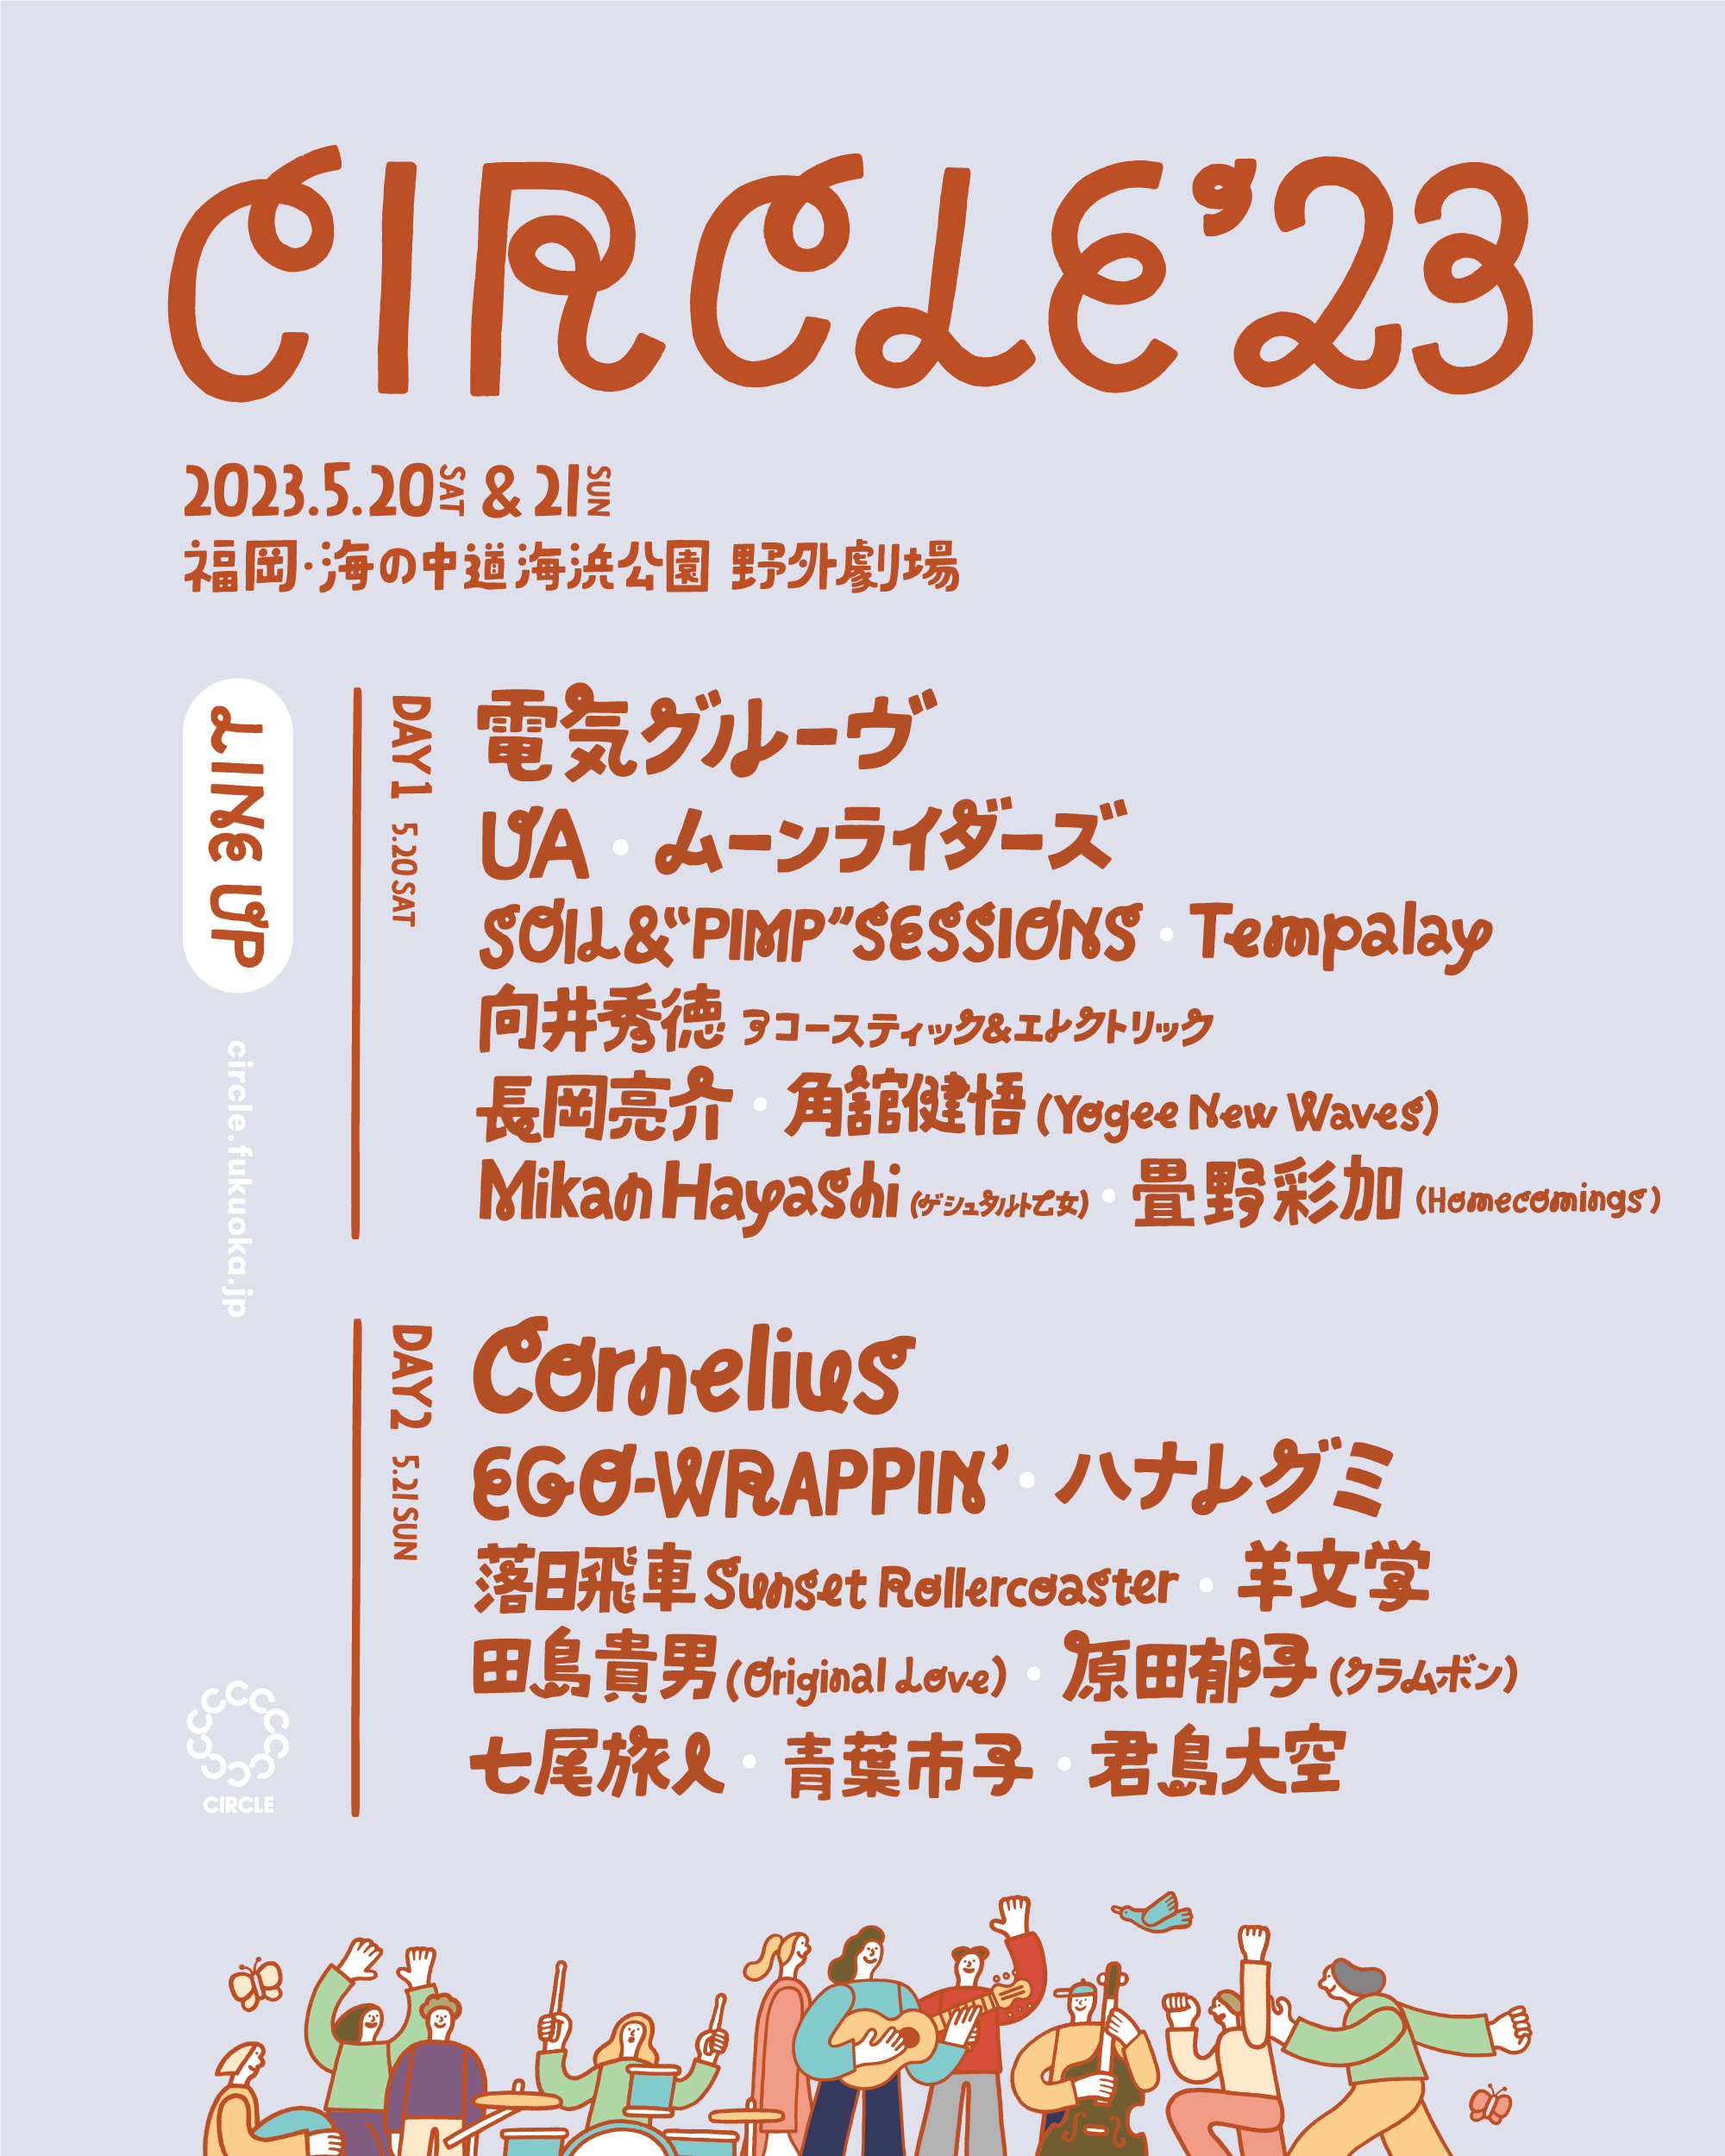 『CIRCLE '23』